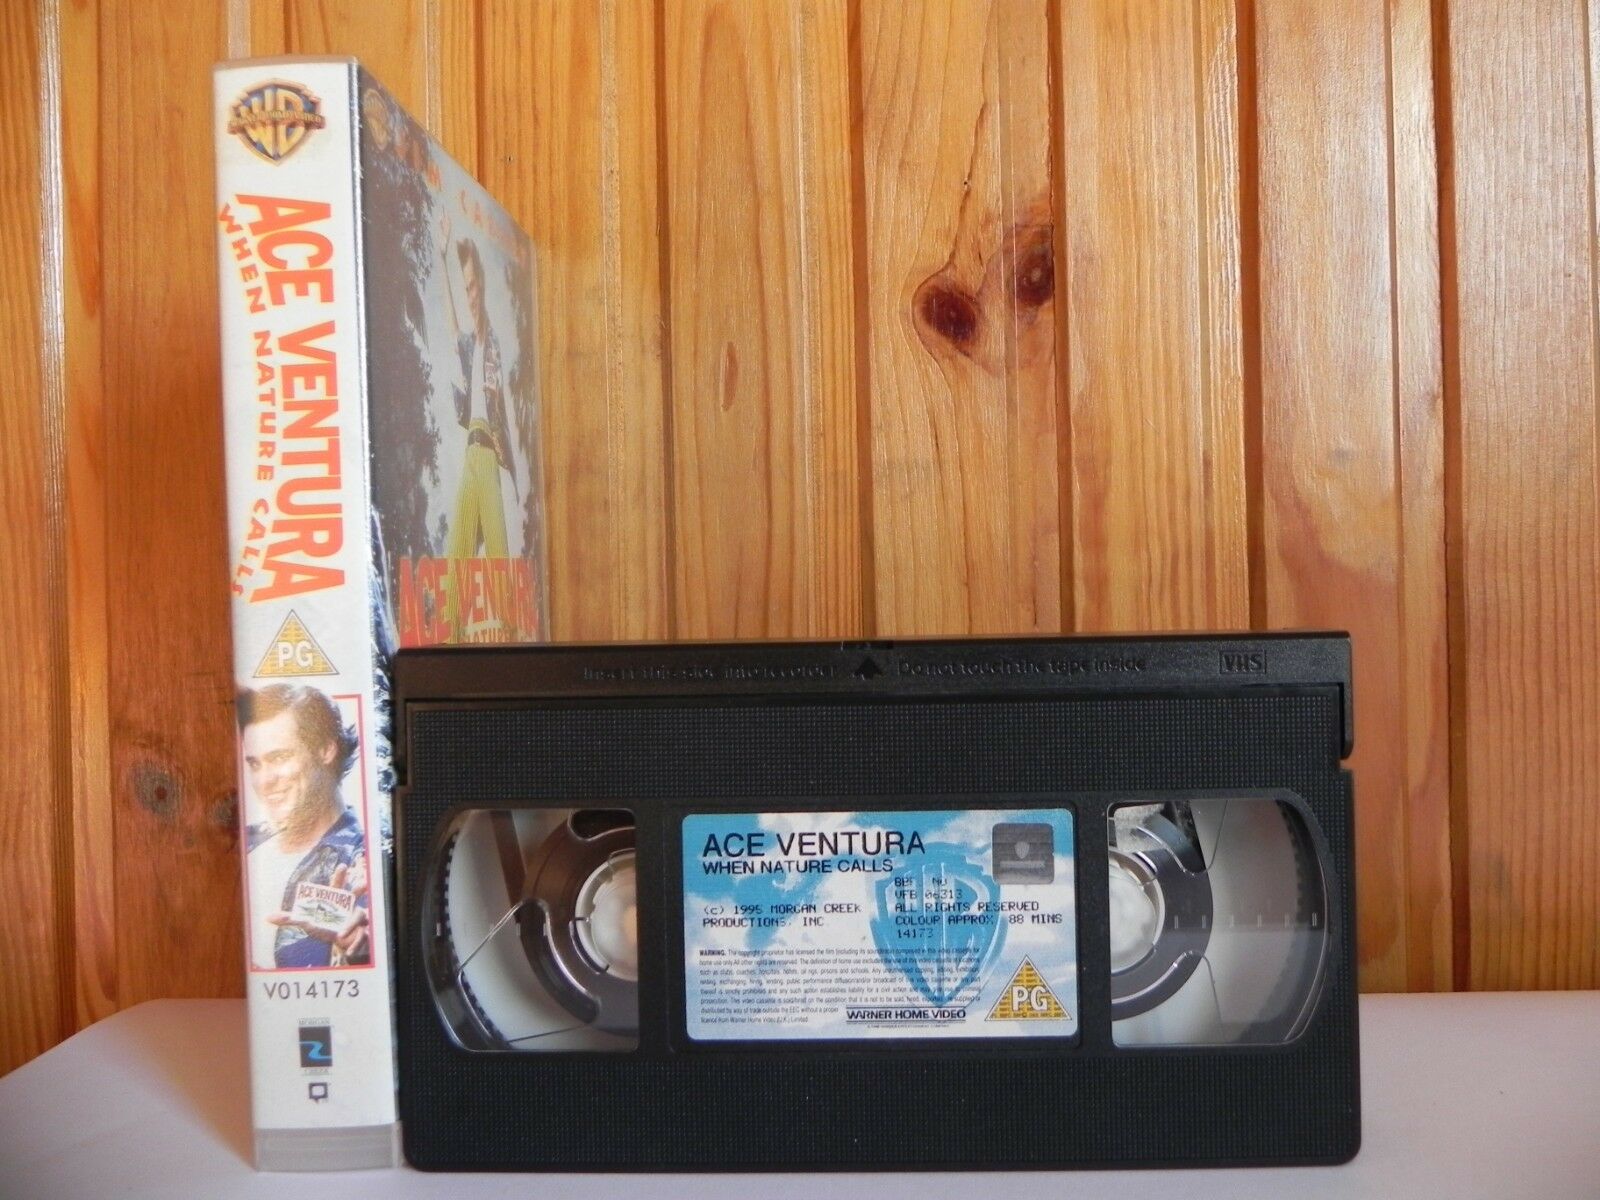 Ace Ventura - Large Box - Warner - Comedy - Jim Carrey - Ian McNeice - Pal VHS-